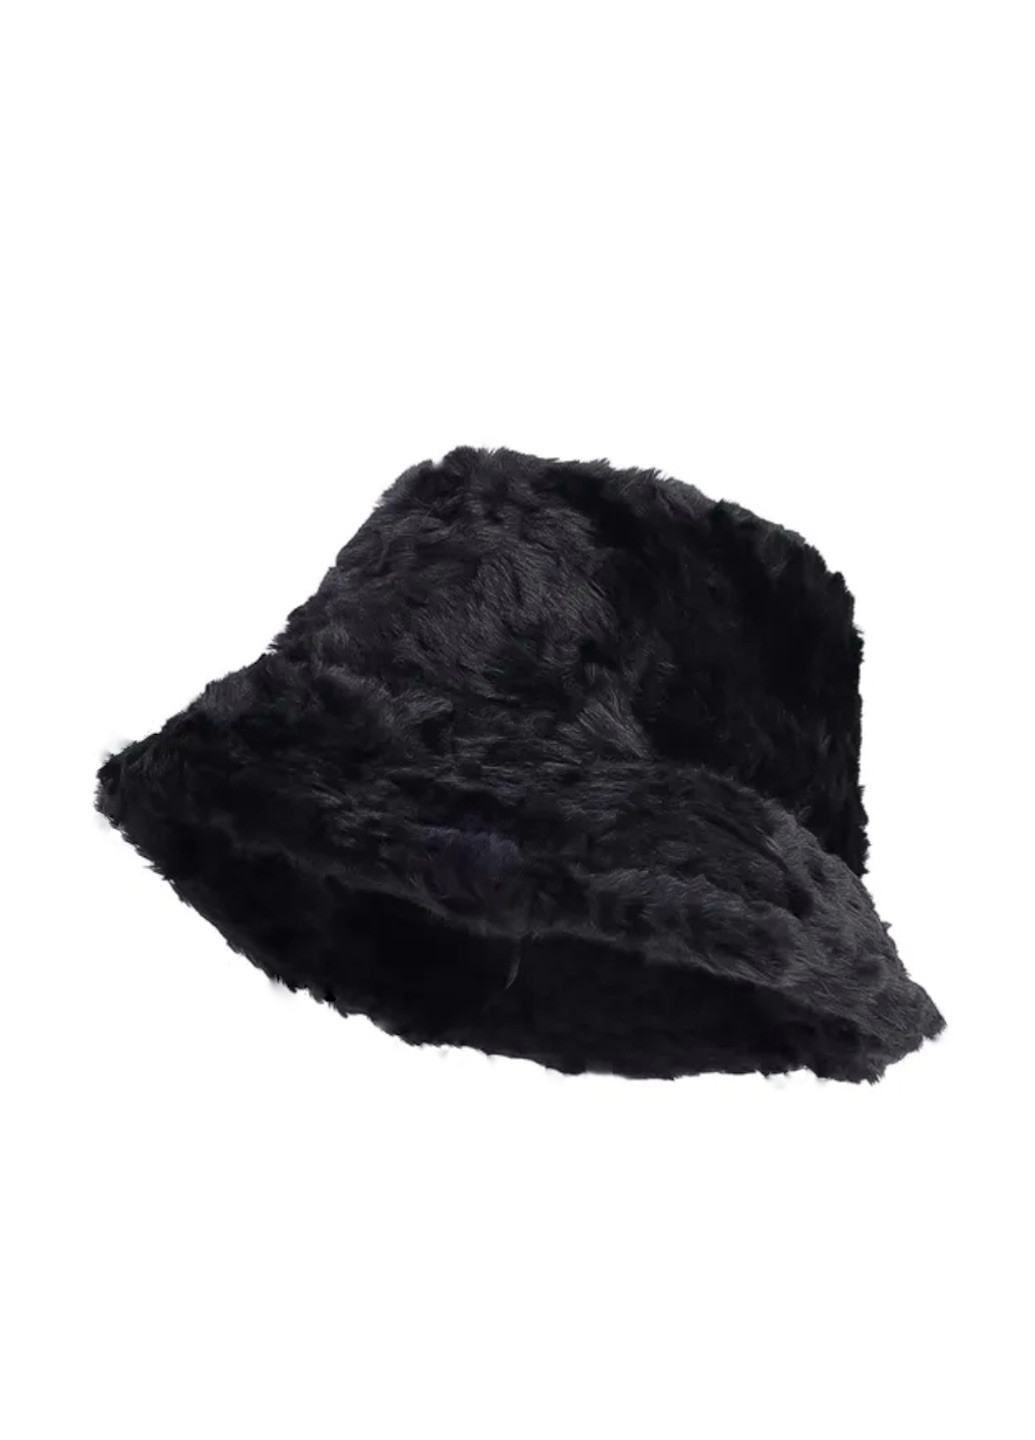 Wuke Пухнаста з куліскою хутряна плюшева тедді баранчик каракуль унісекс one size Чорна Brand шапка-панама (257252940)